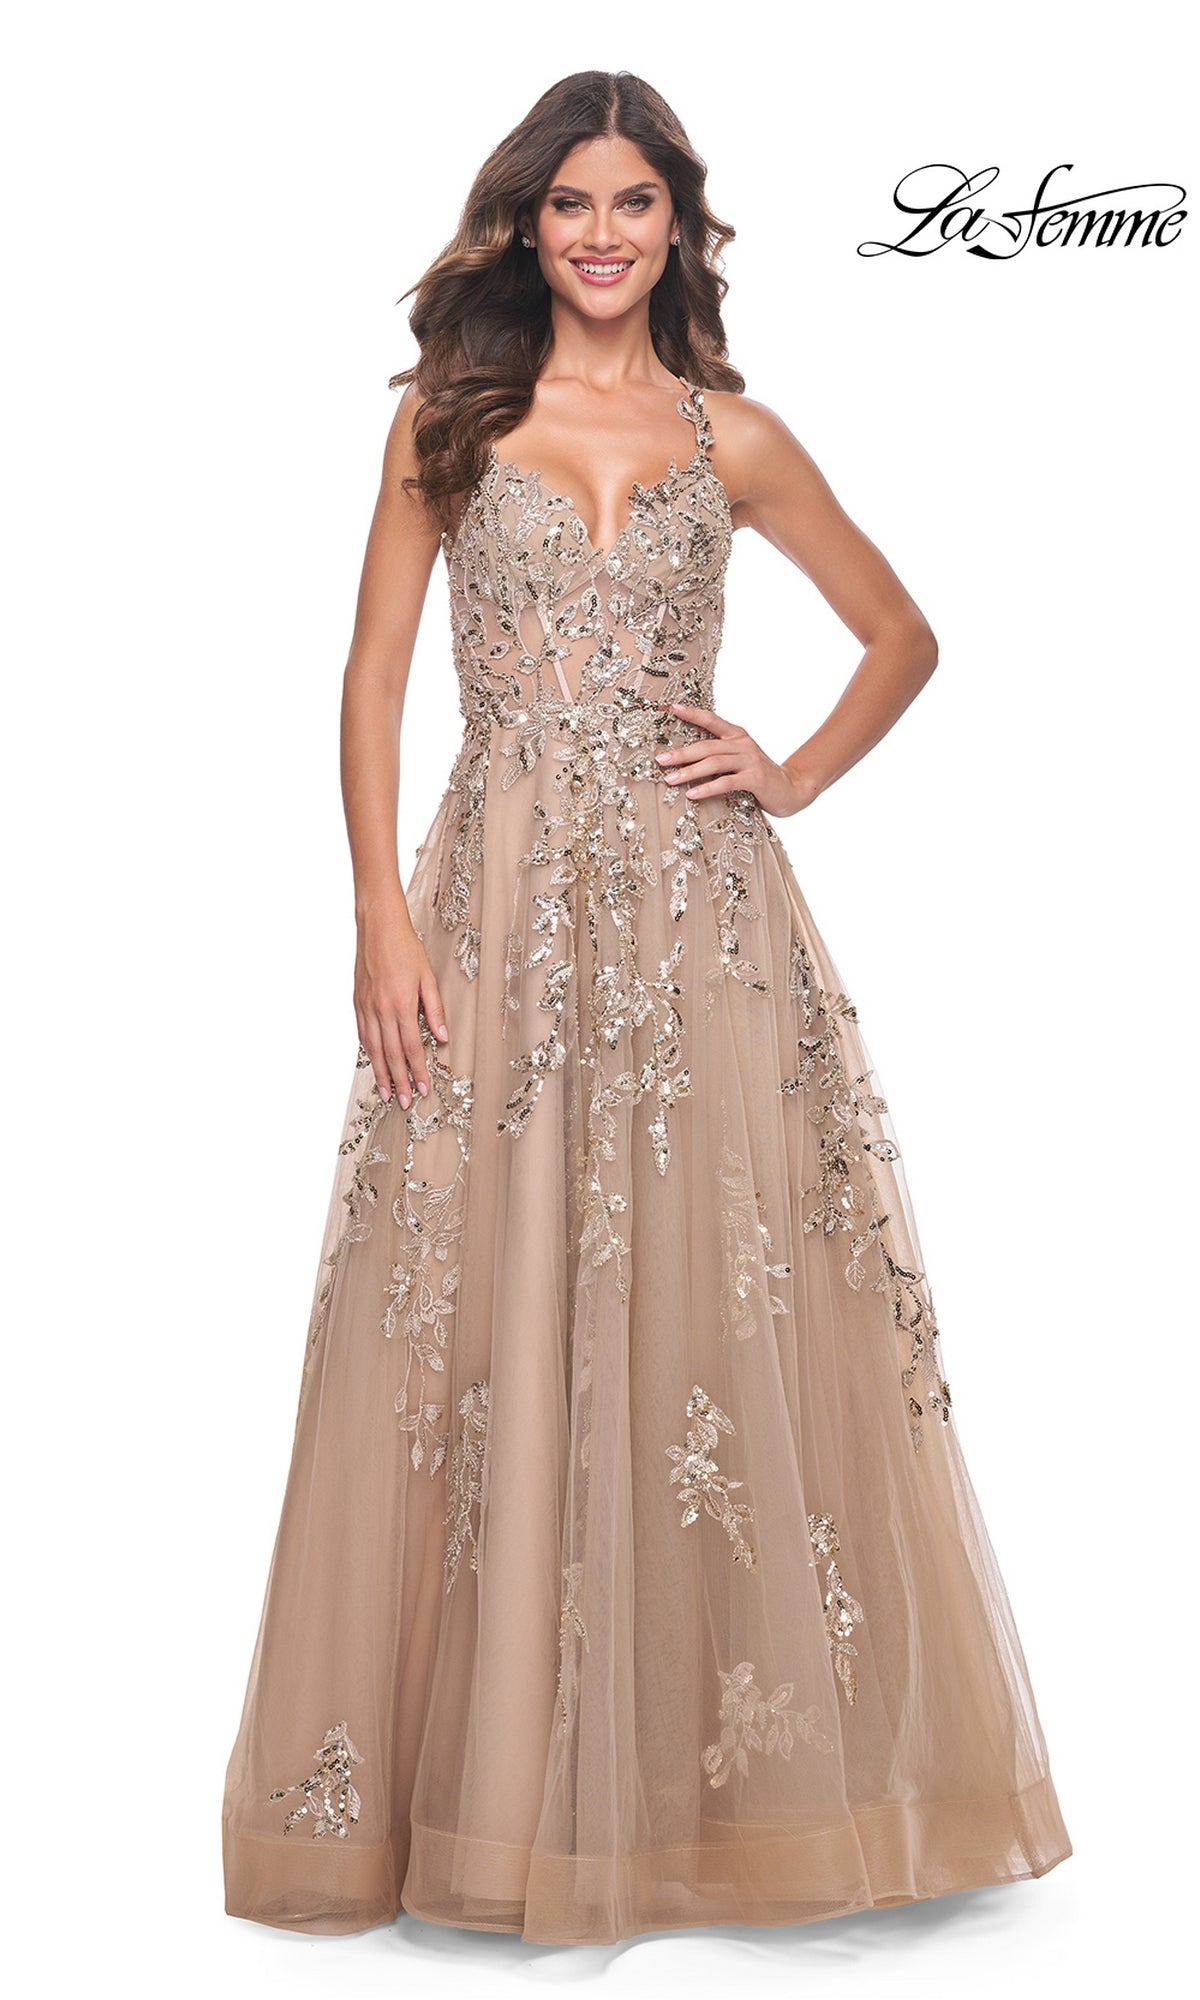  La Femme 32052 Formal Prom Dress